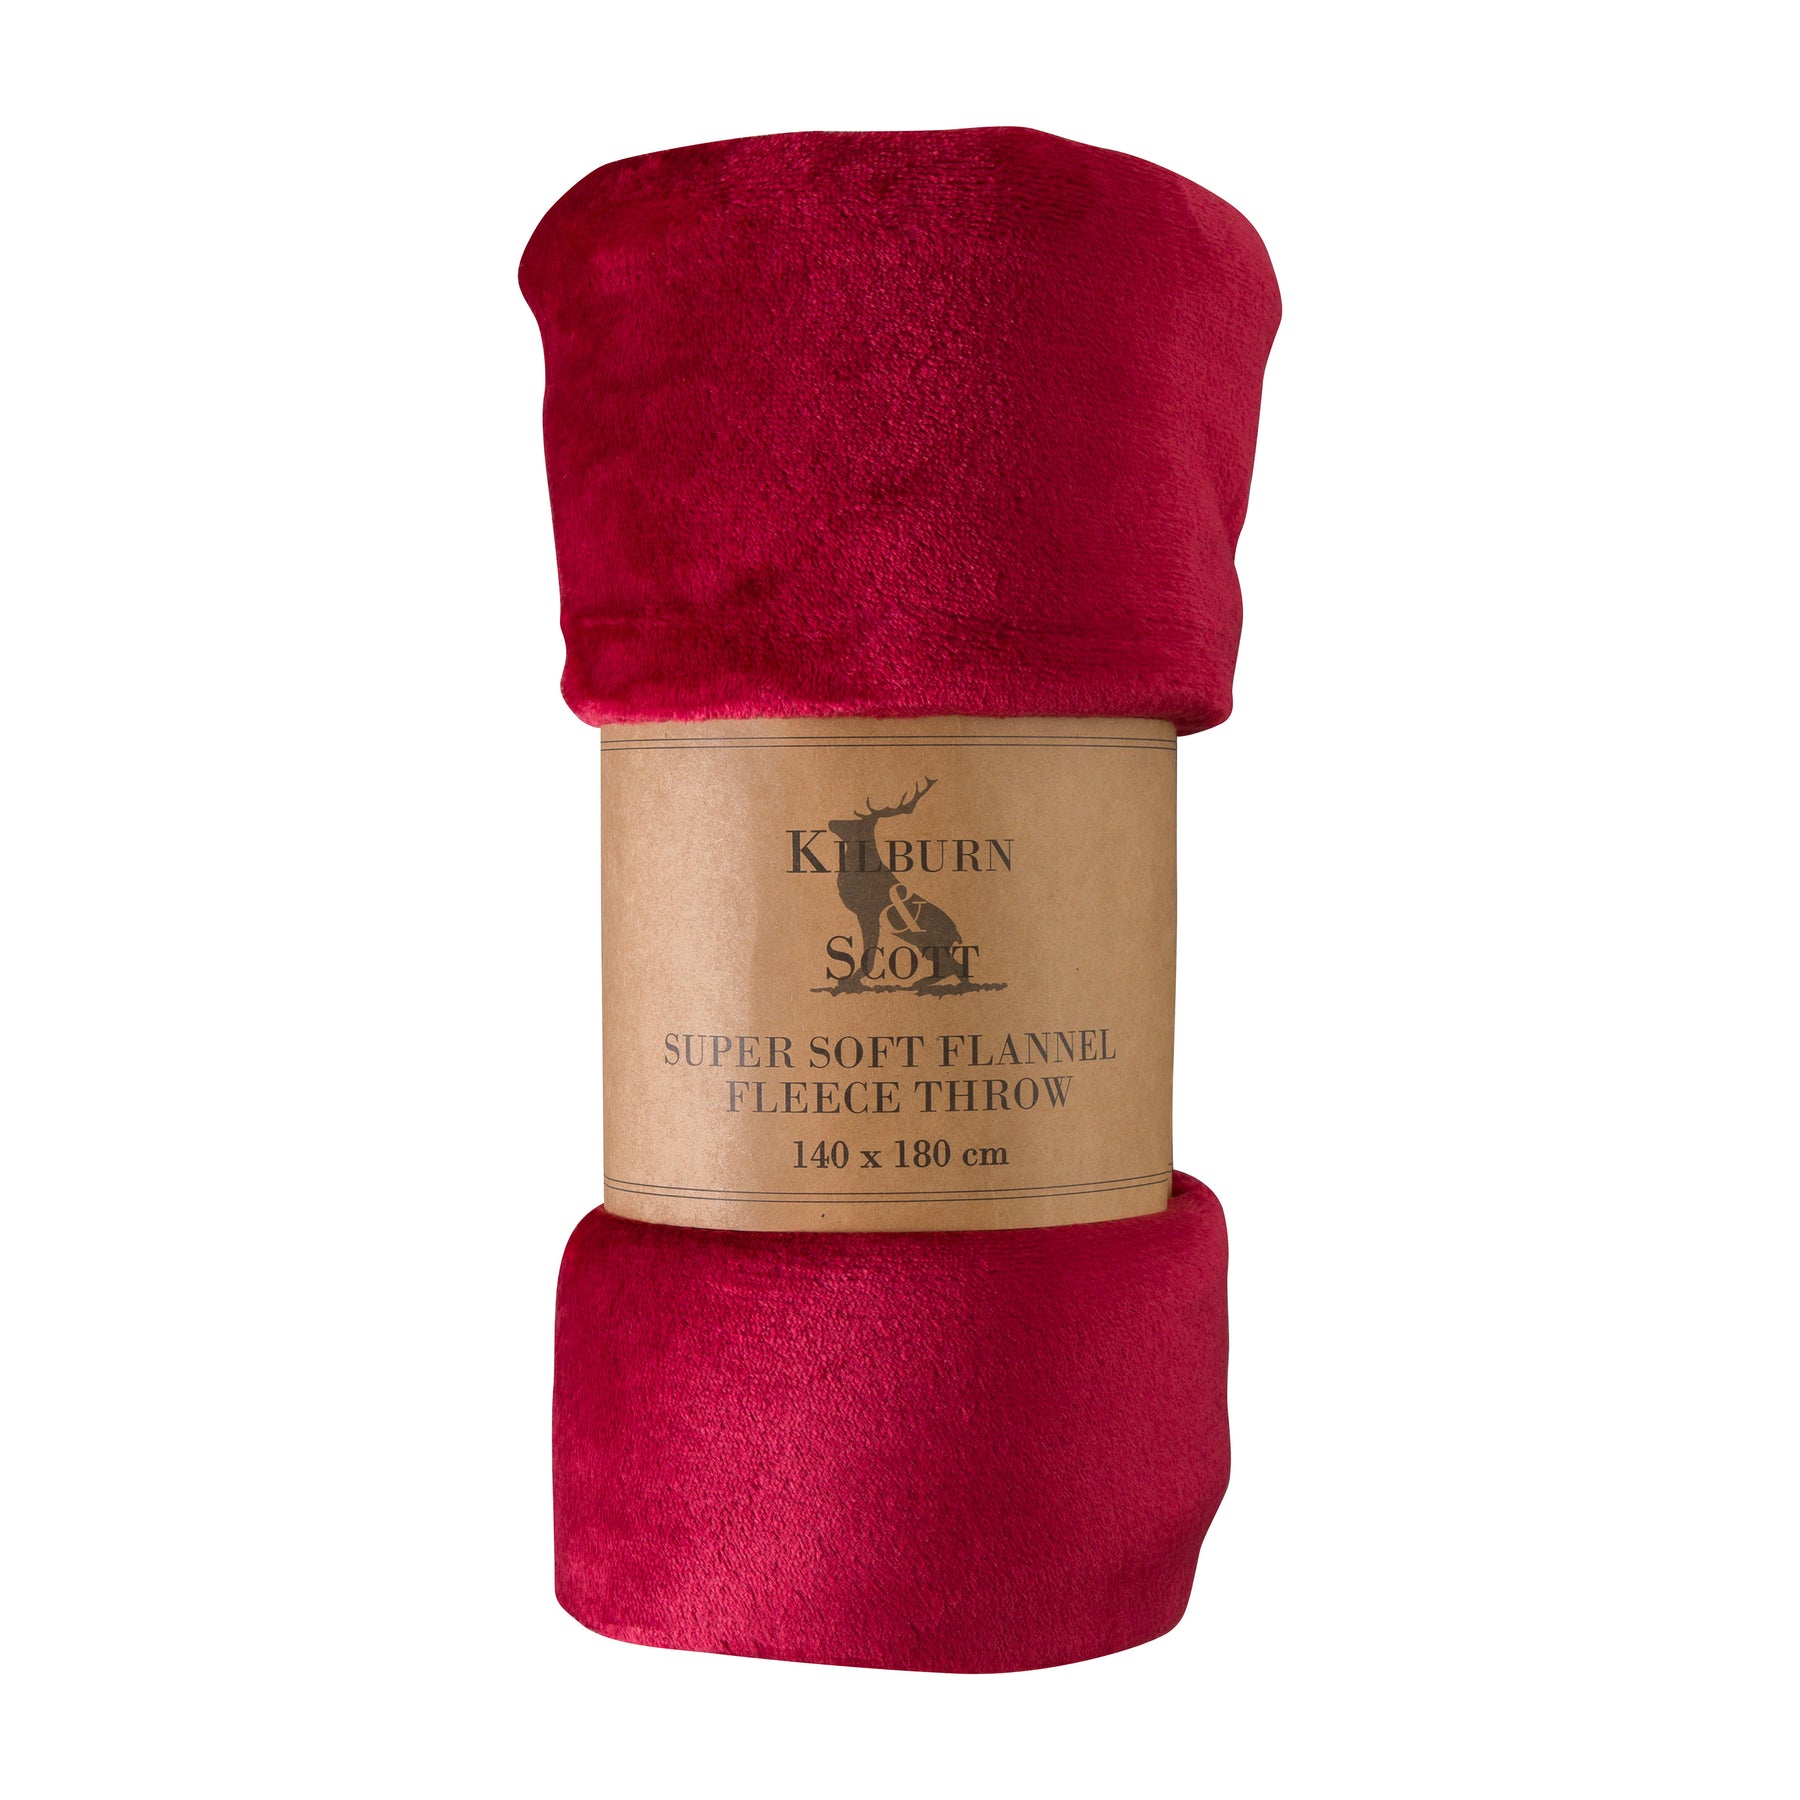 Rolled Flannel Fleece Throw 140cm x 180cm Red